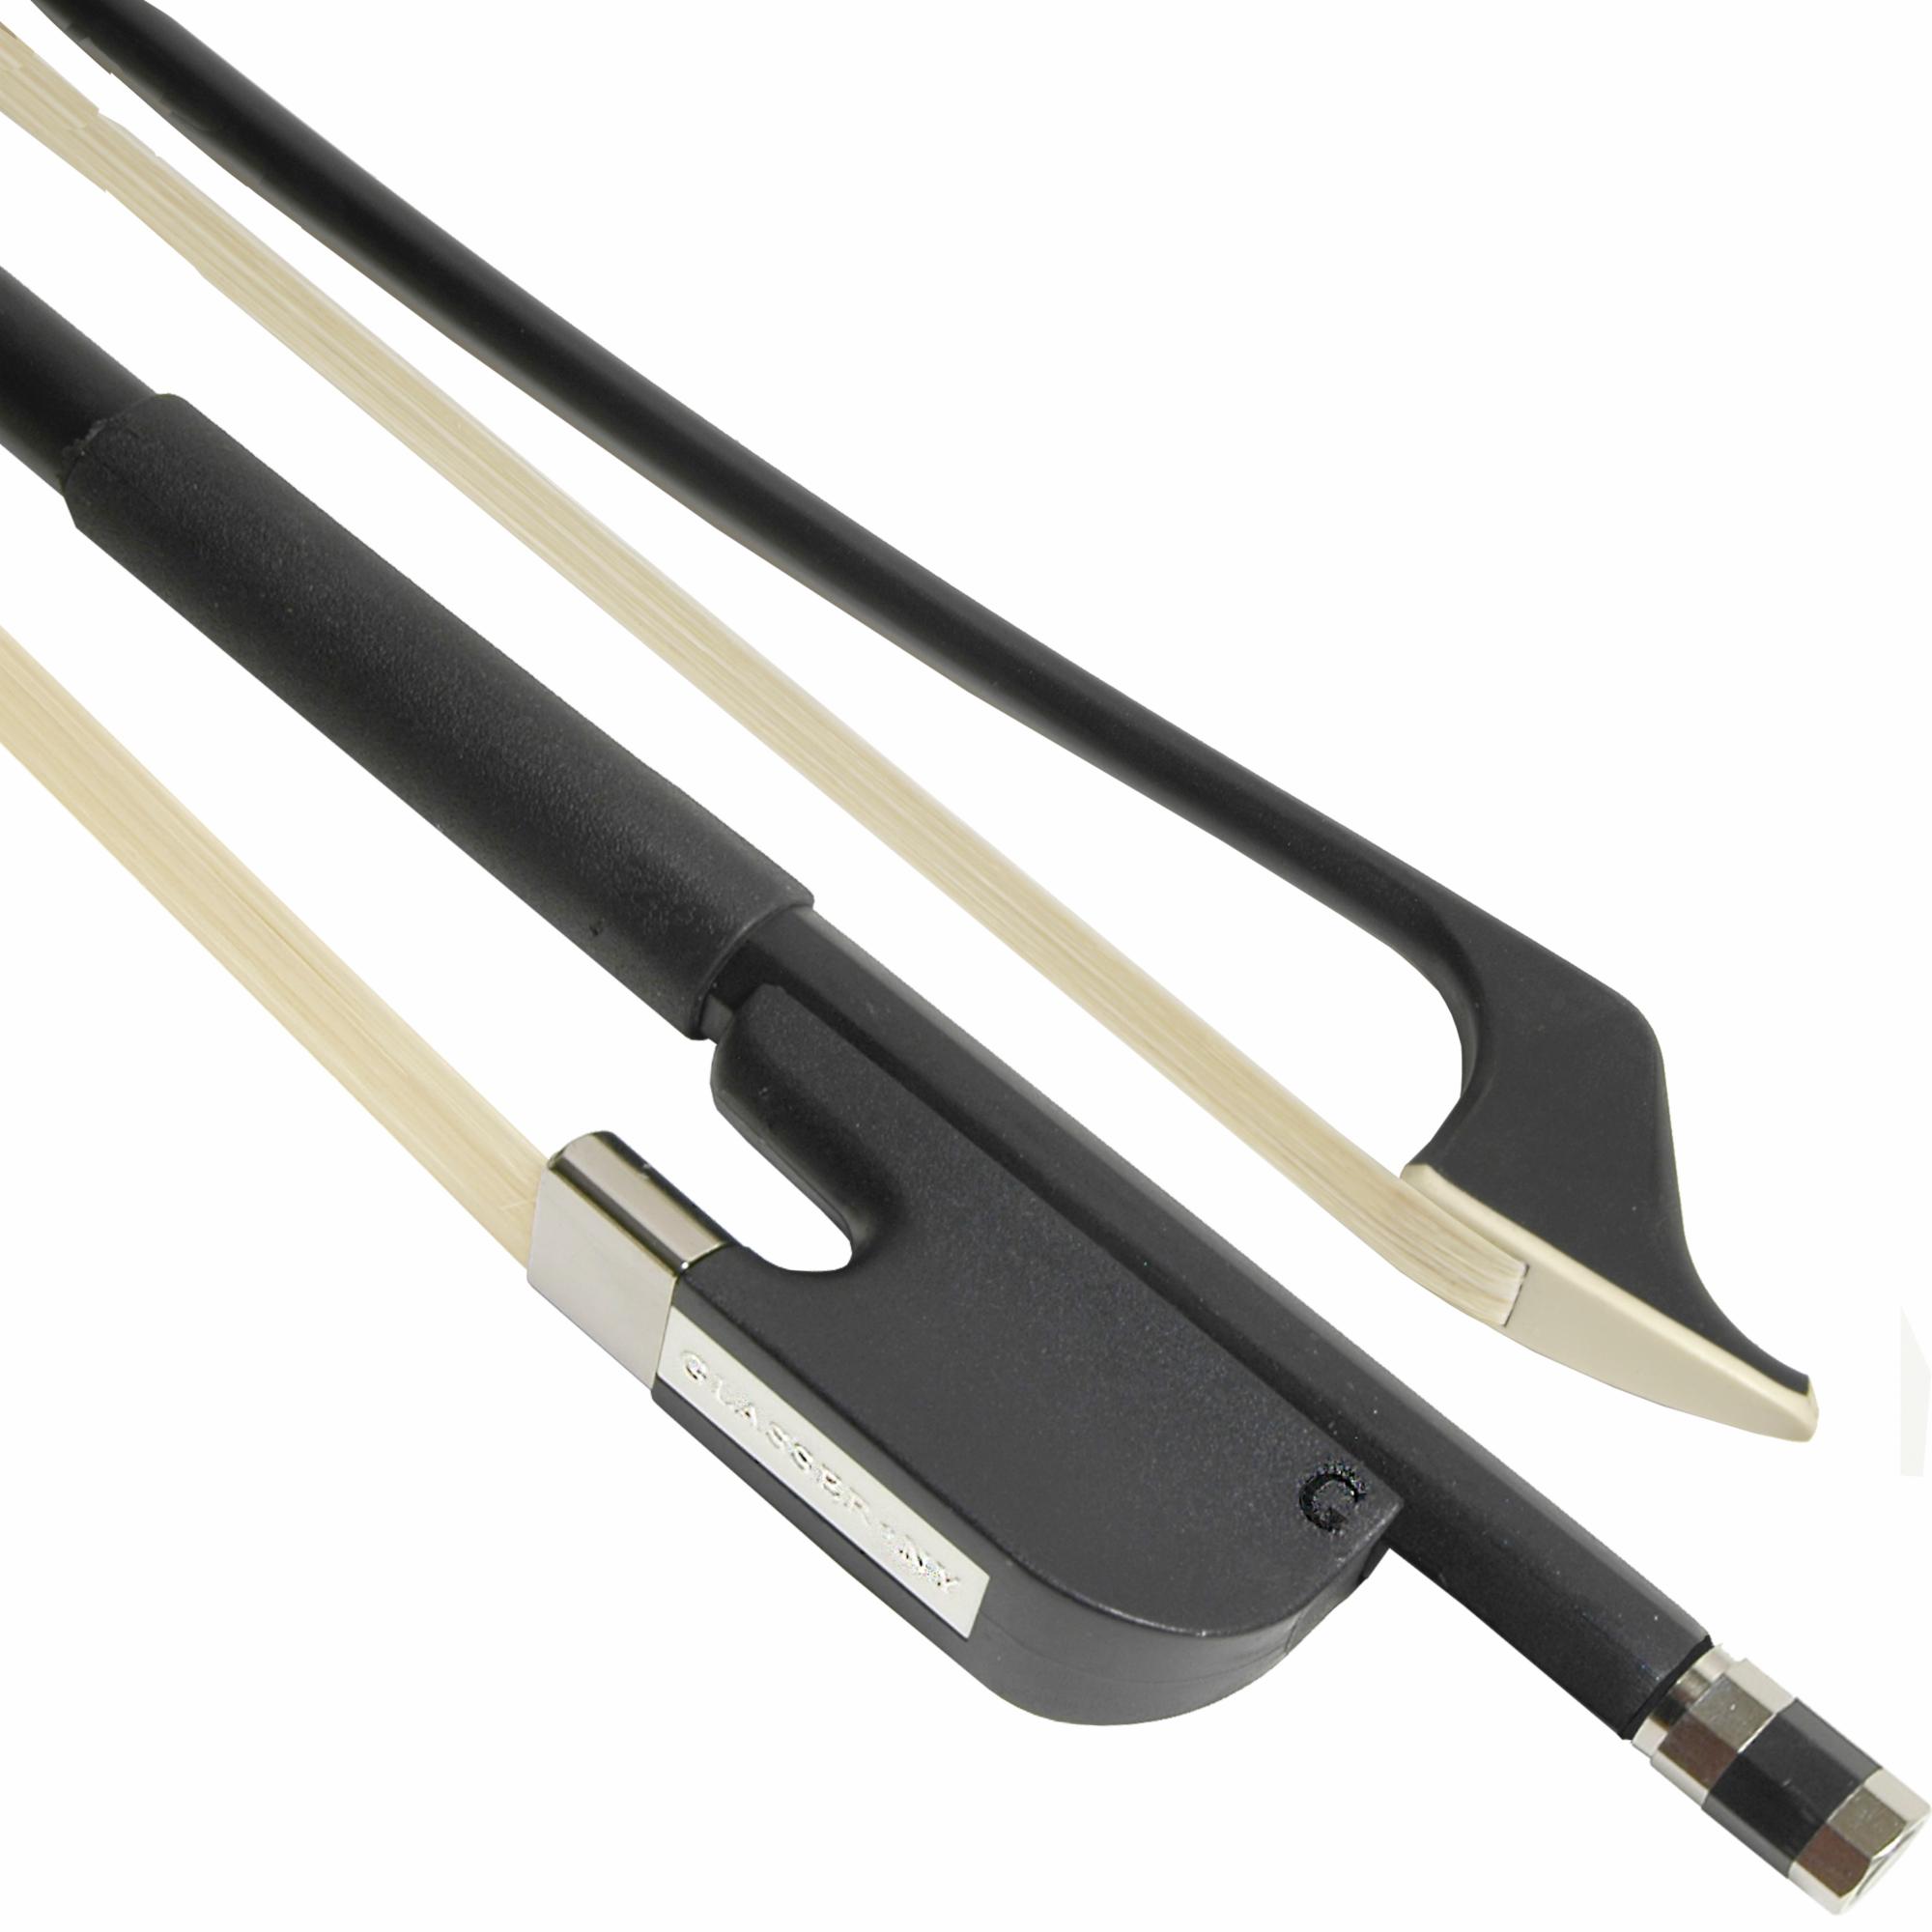 Glasser French or German Round Fiberglass Bass Bow